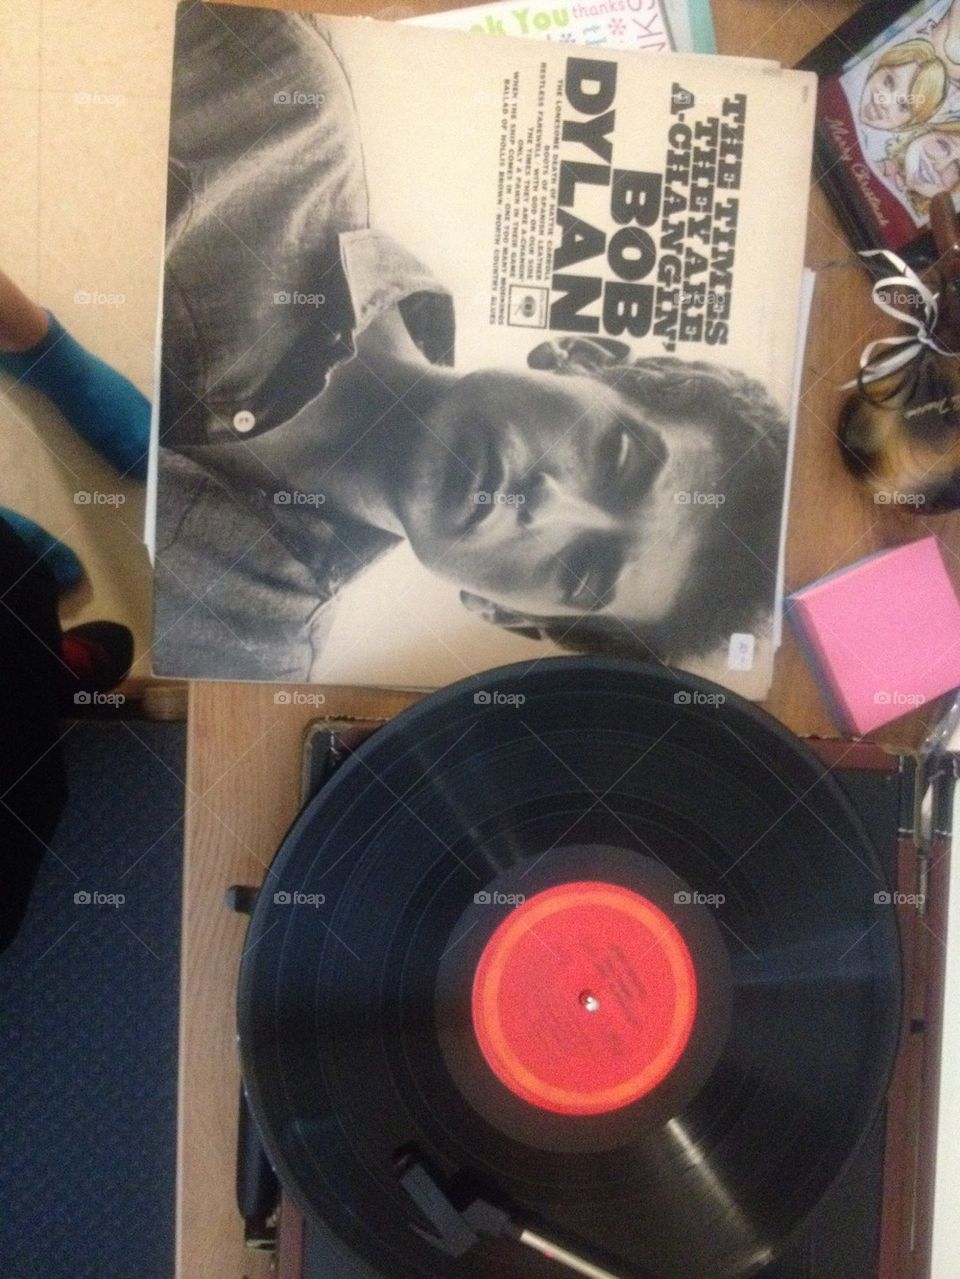 Bob Dylan Vinyl